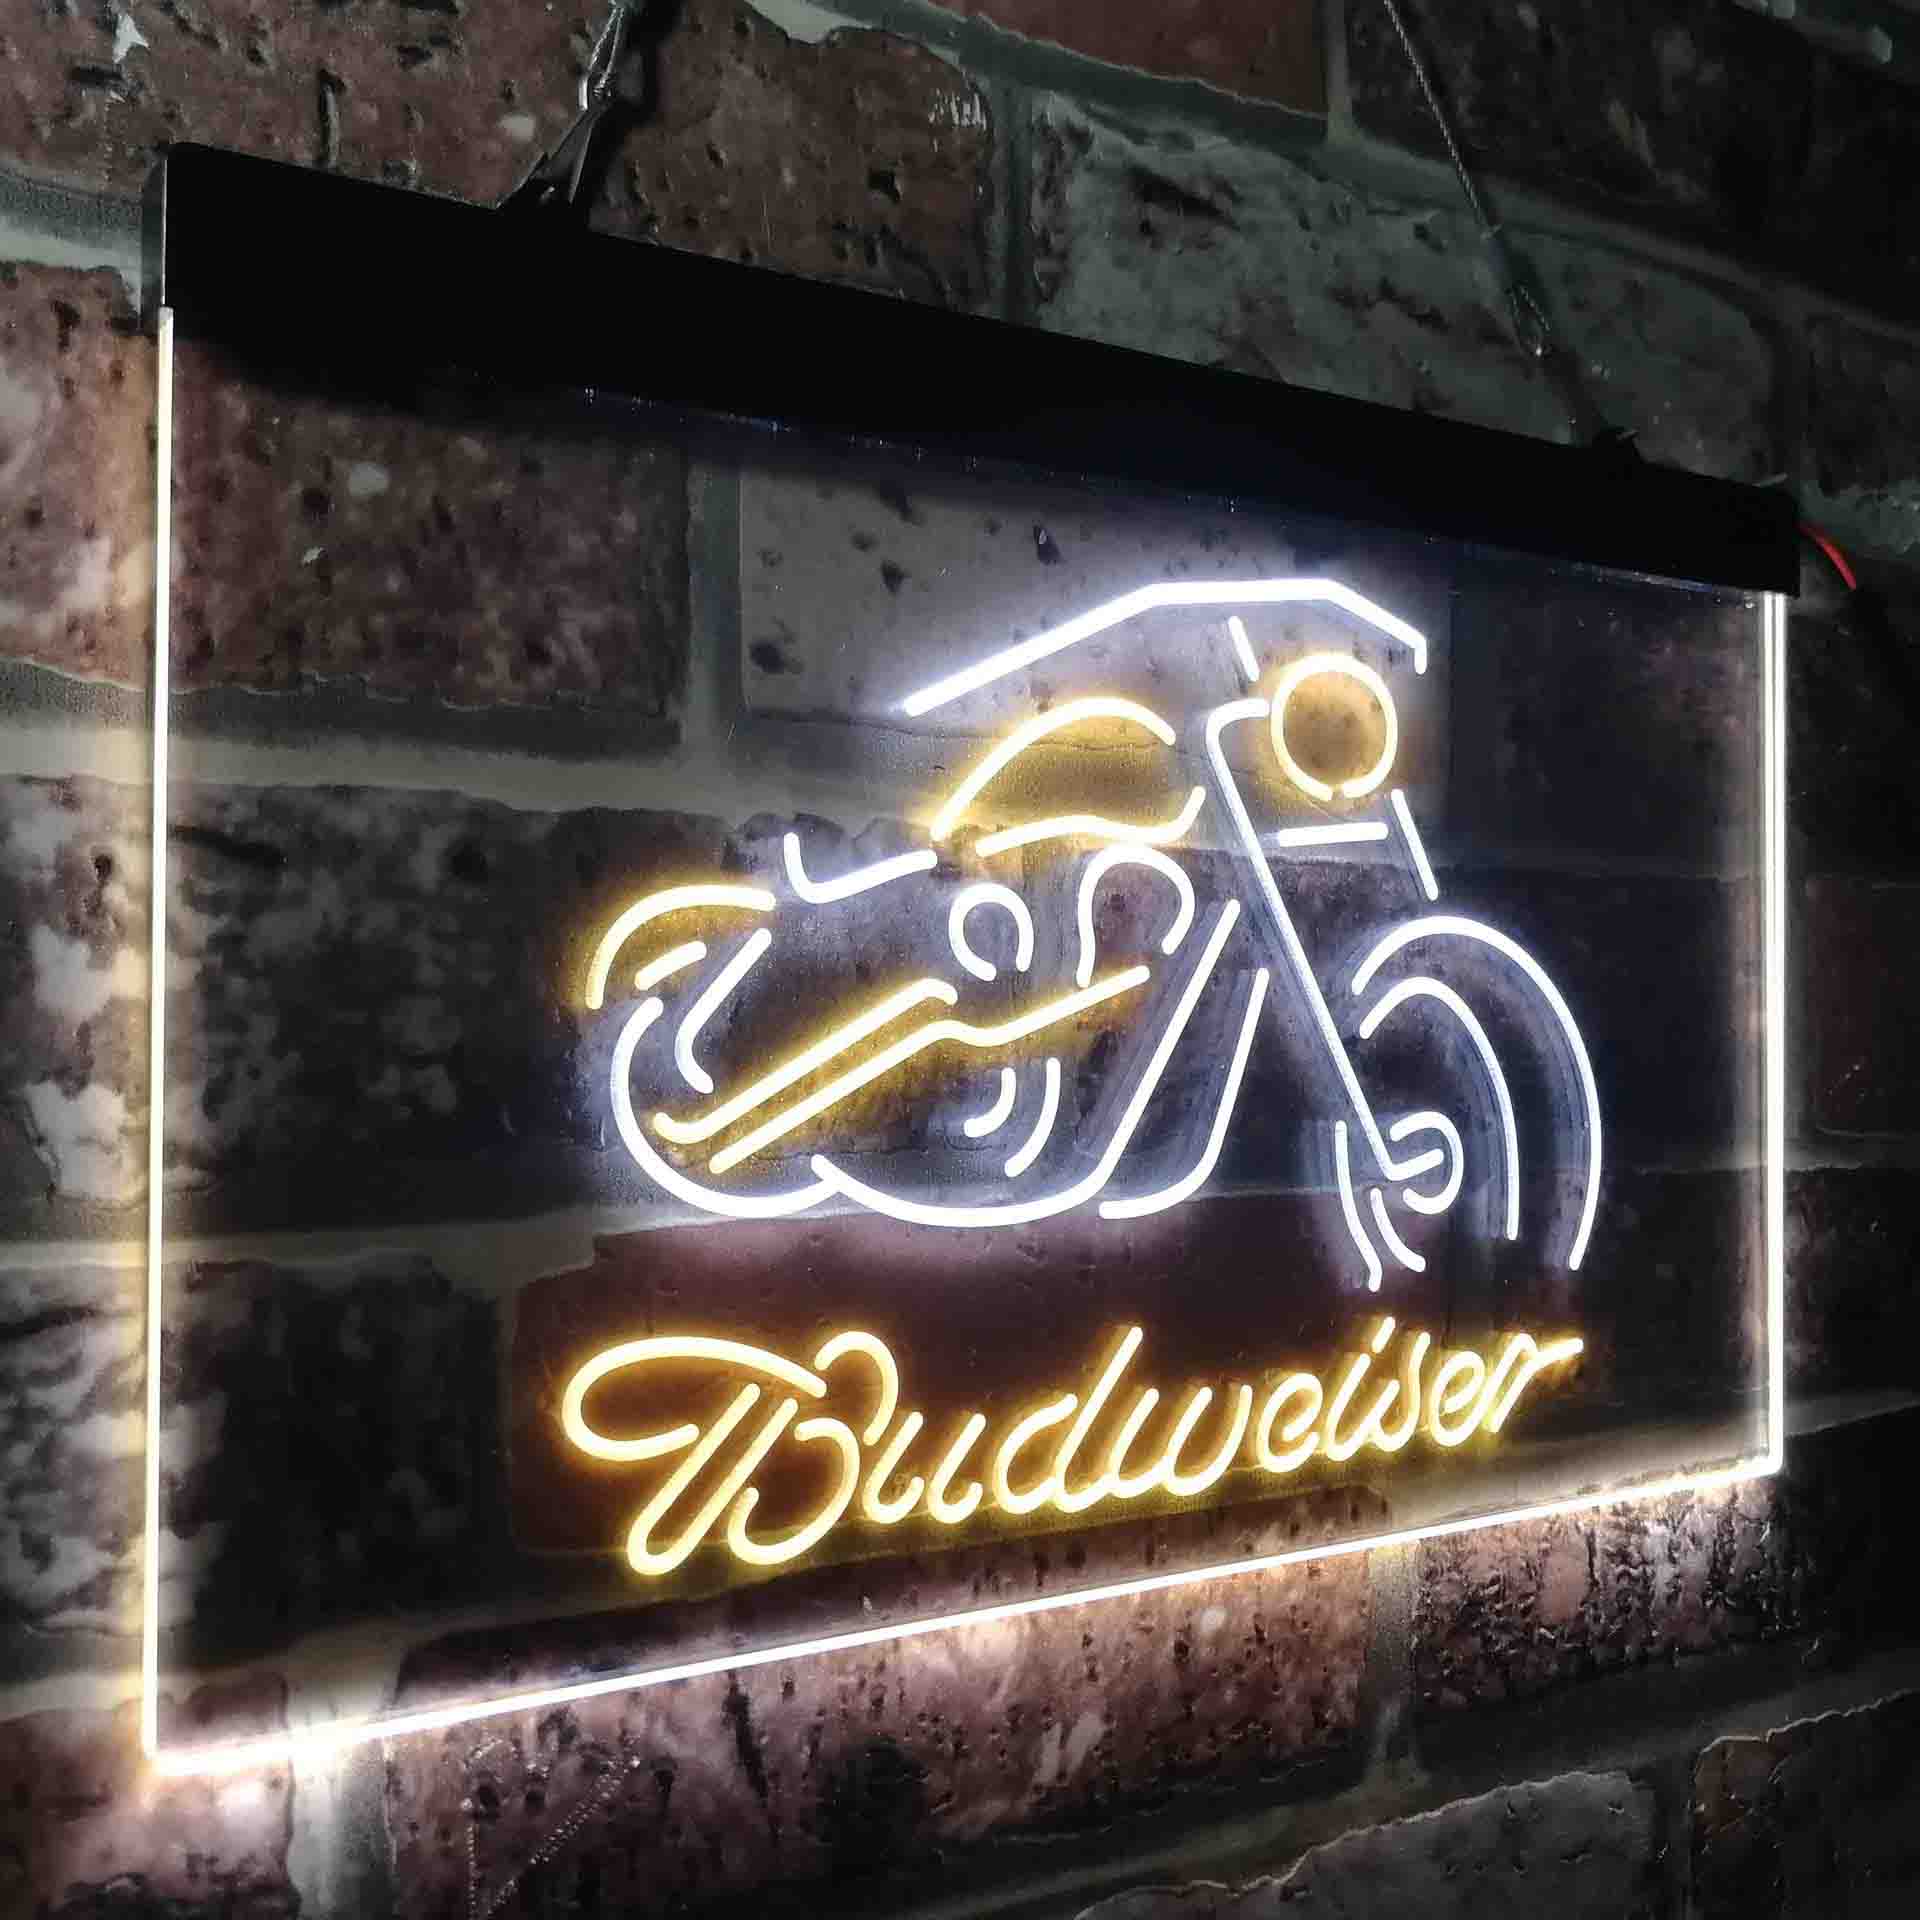 Budweiser Motorcycle Garage Neon-Like LED Sign